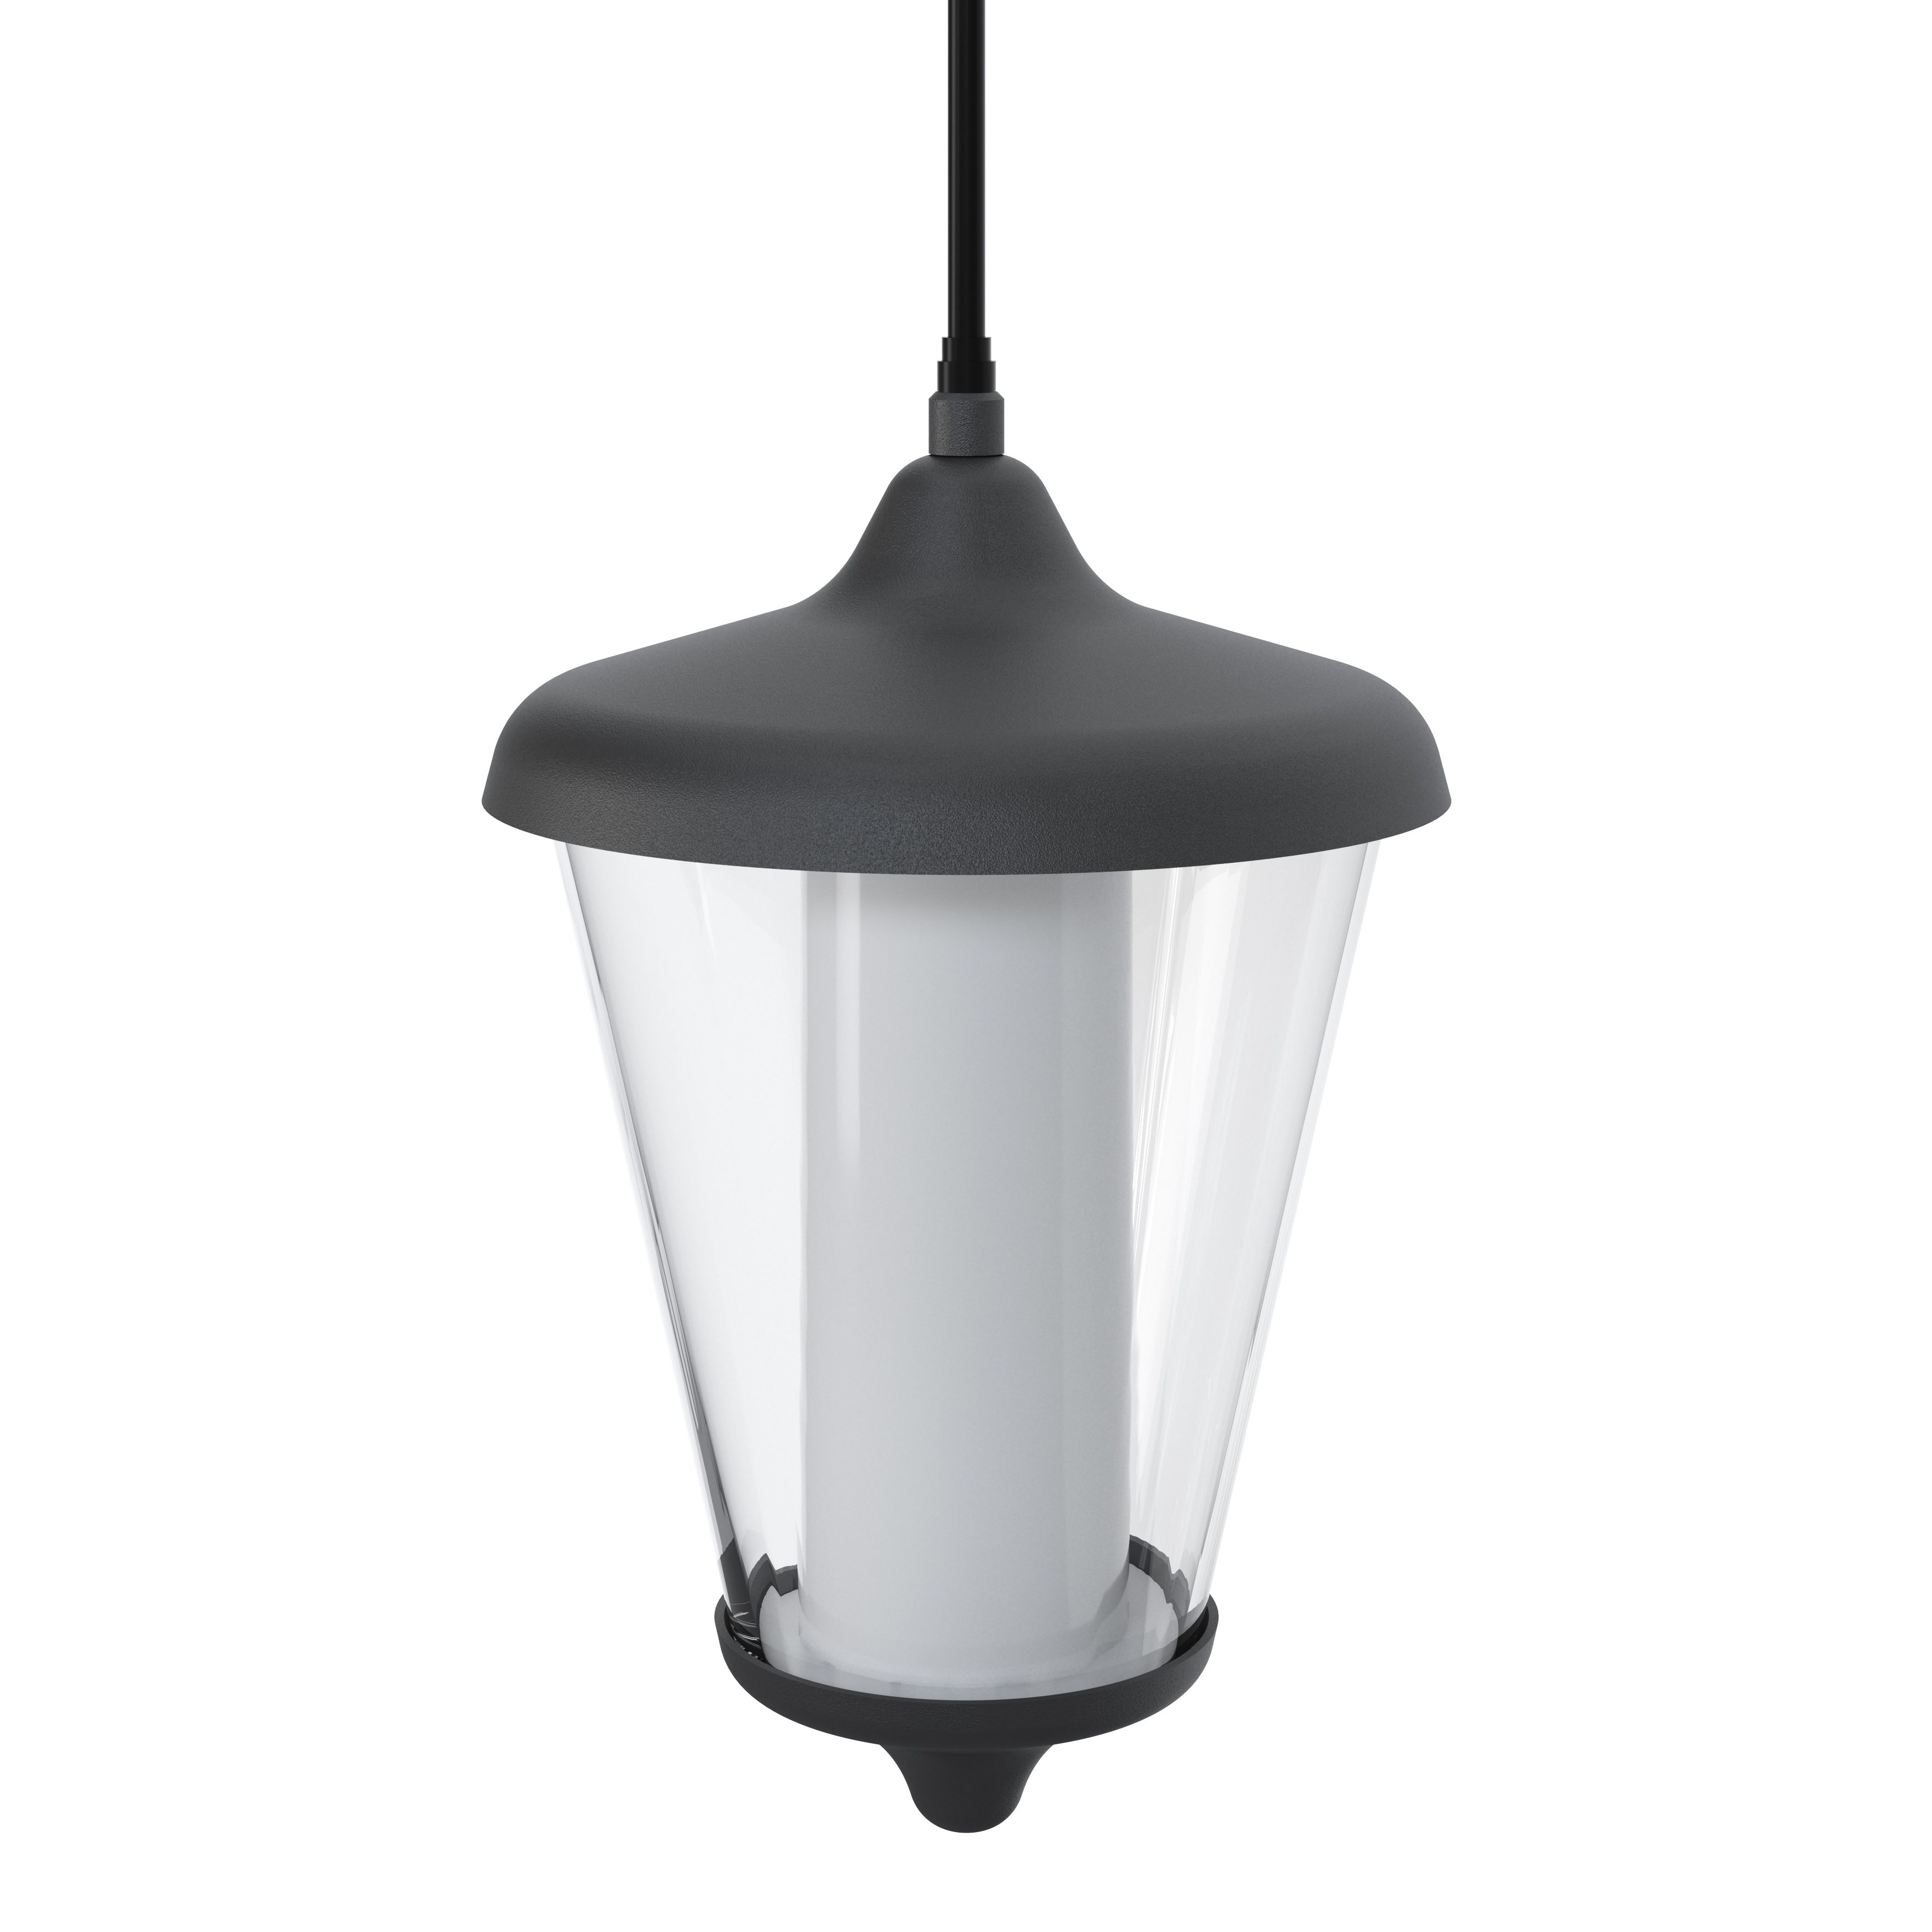 GoodHome Dark grey Mains-powered LED Outdoor Pendant light